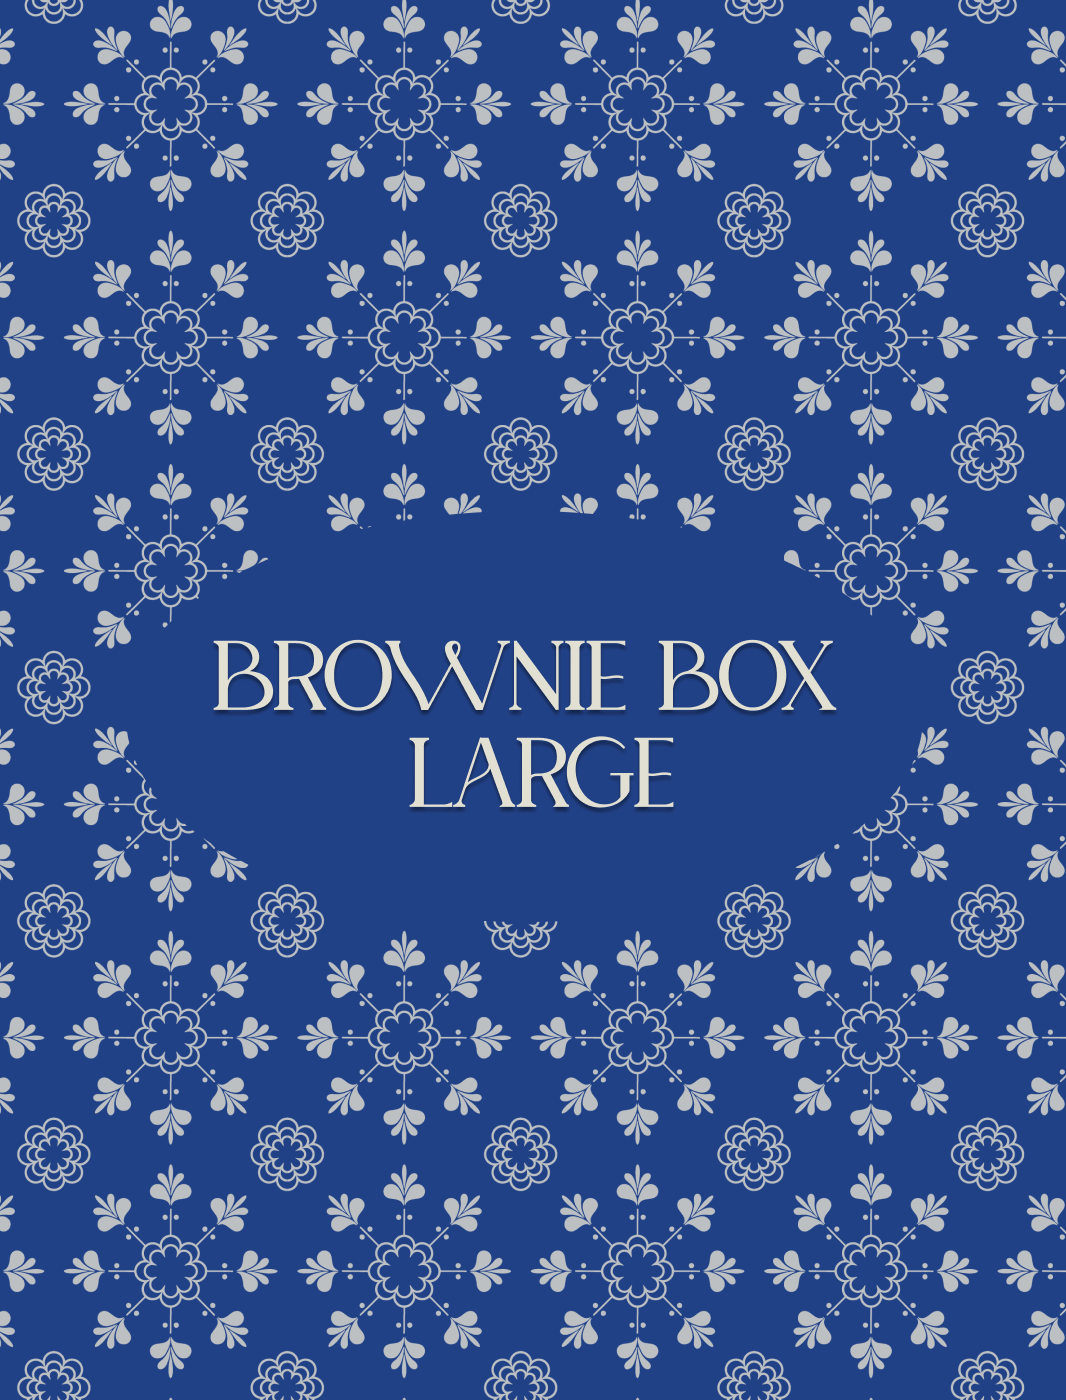 Brownies box large